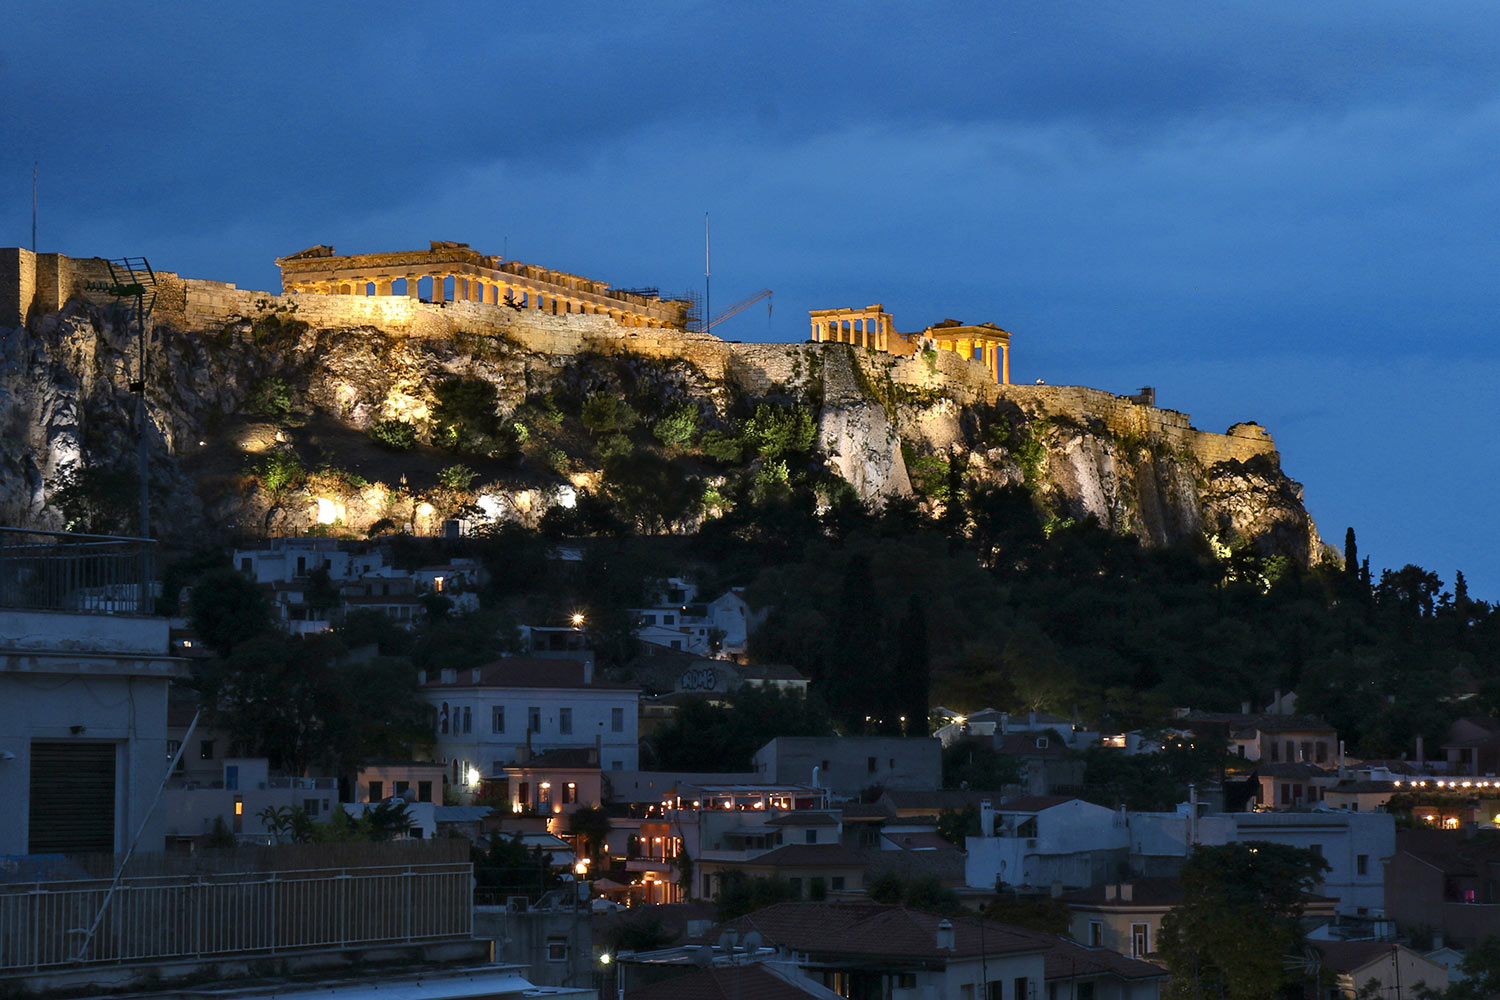 Acropolis by night, Athens, Greece / Acropolis by night, Athens, Greece